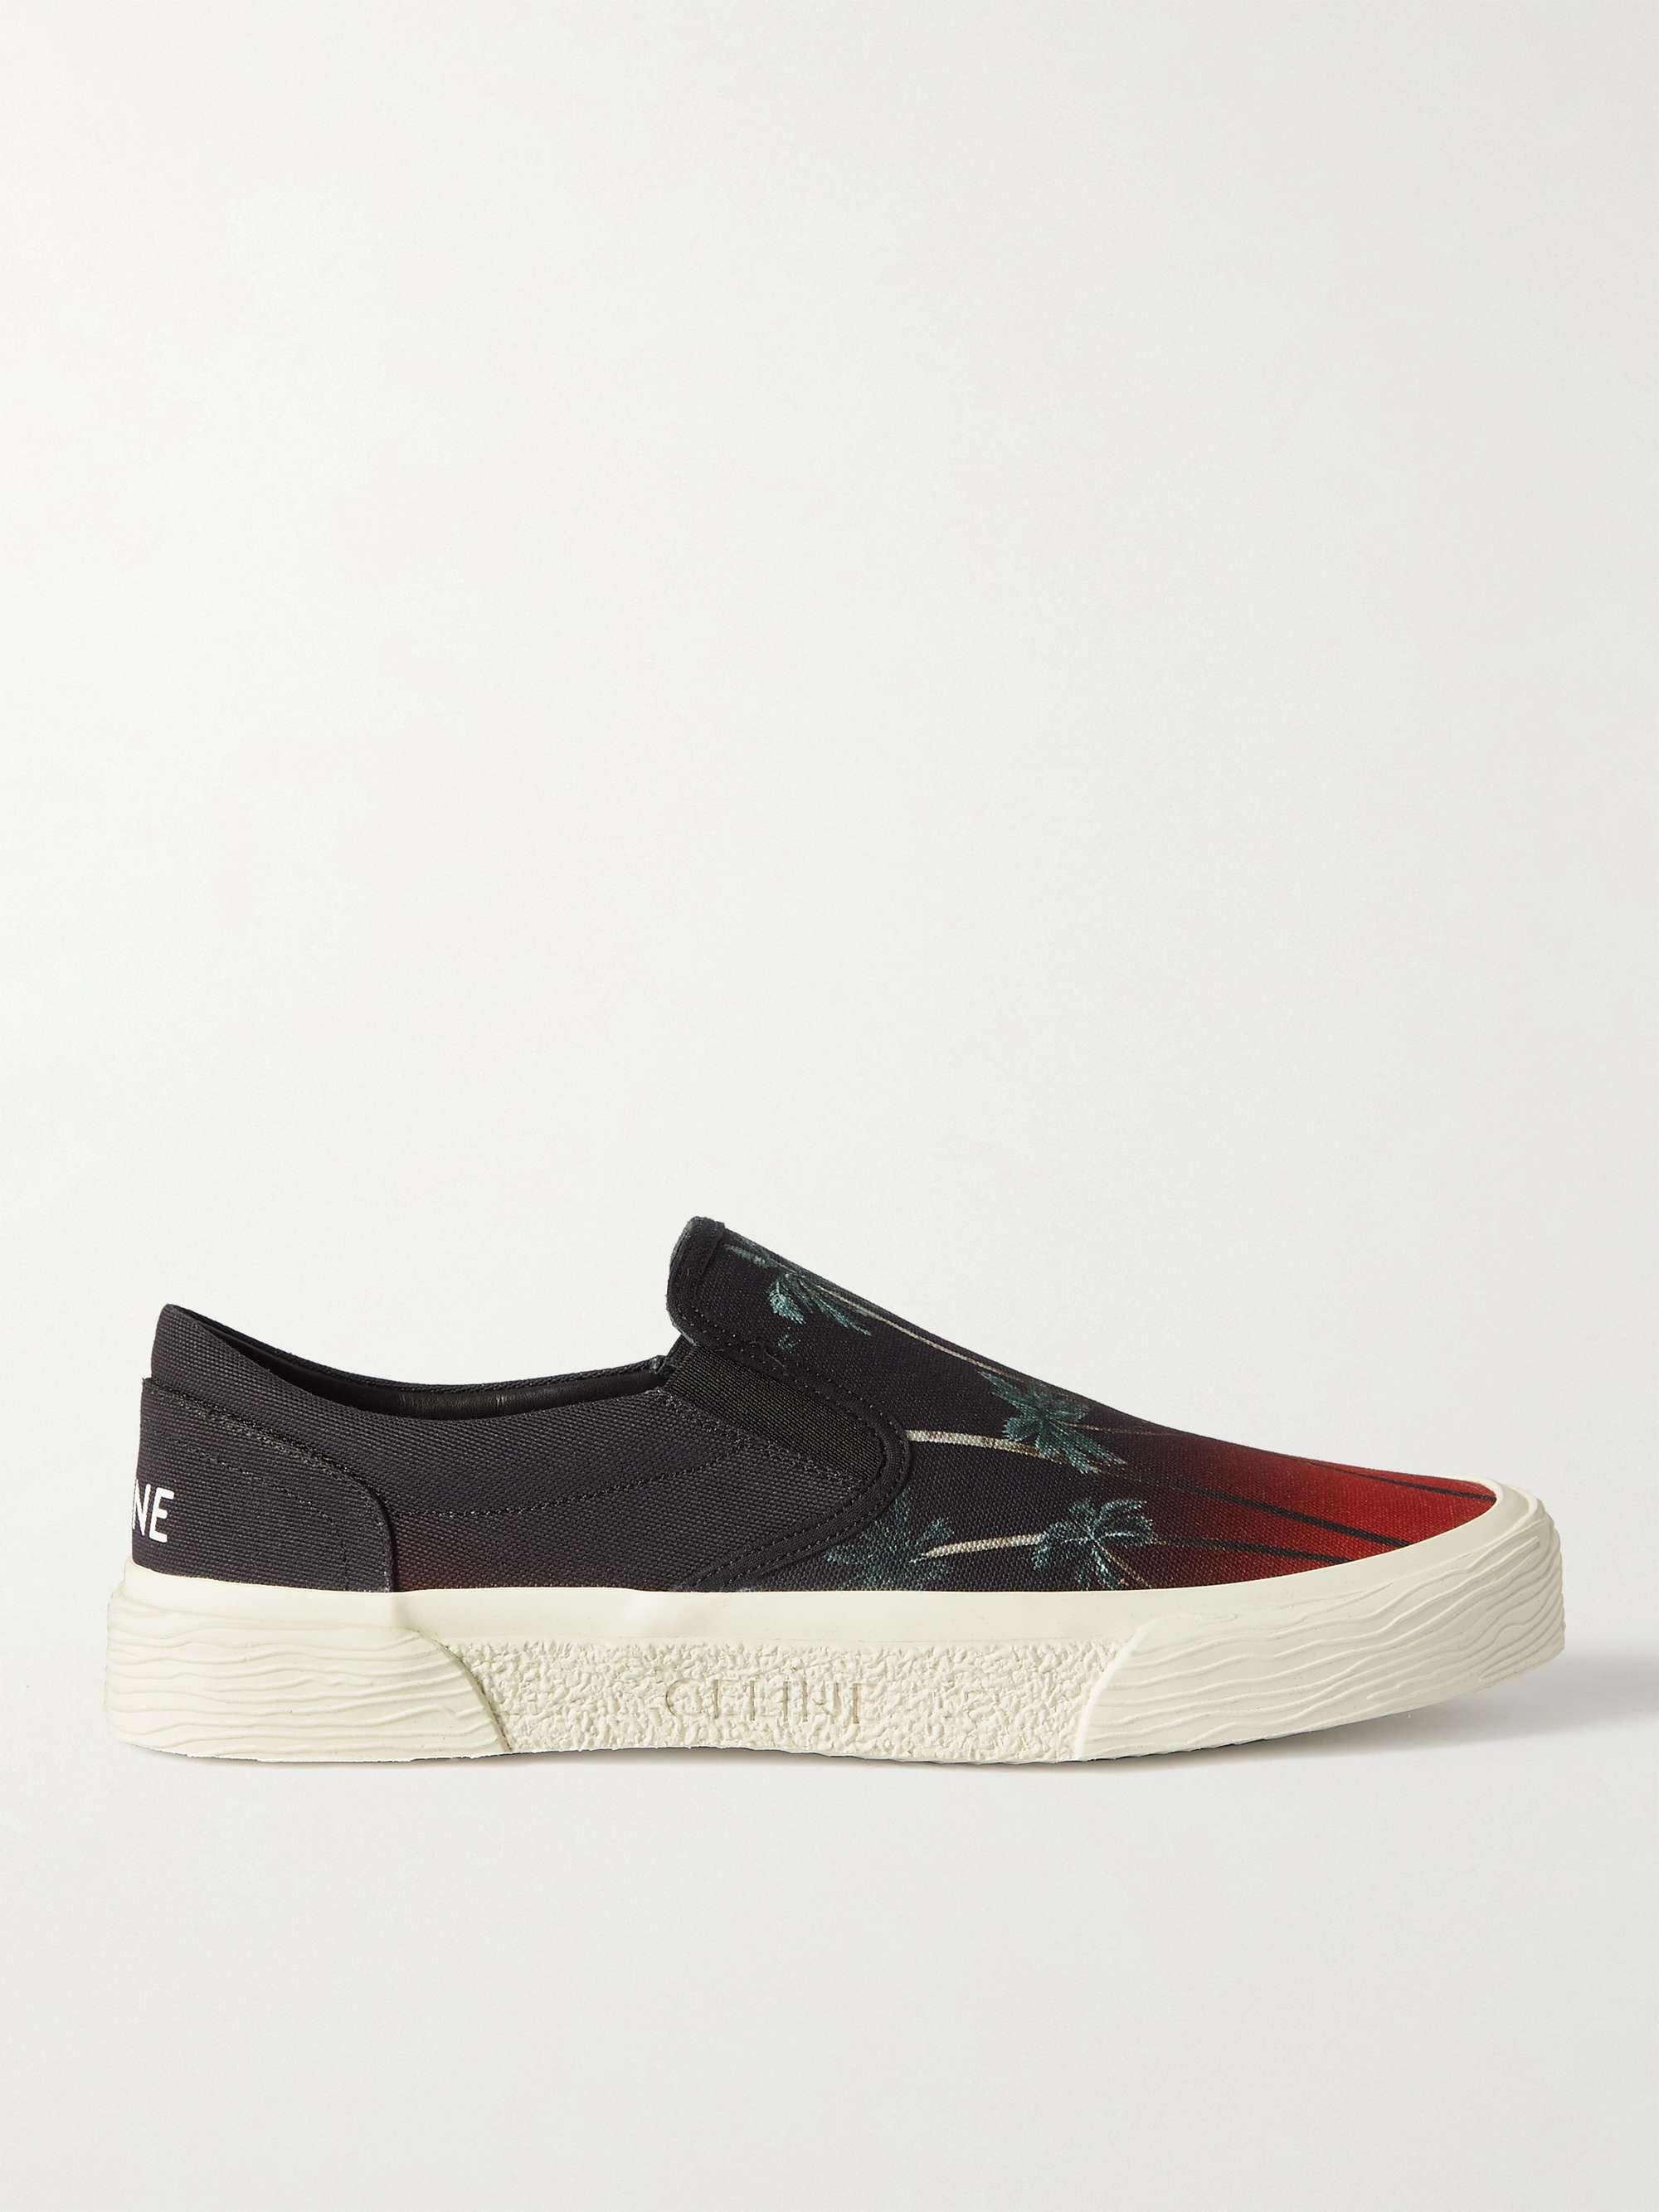 Black Printed Canvas Slip-On Sneakers | CELINE HOMME | MR PORTER